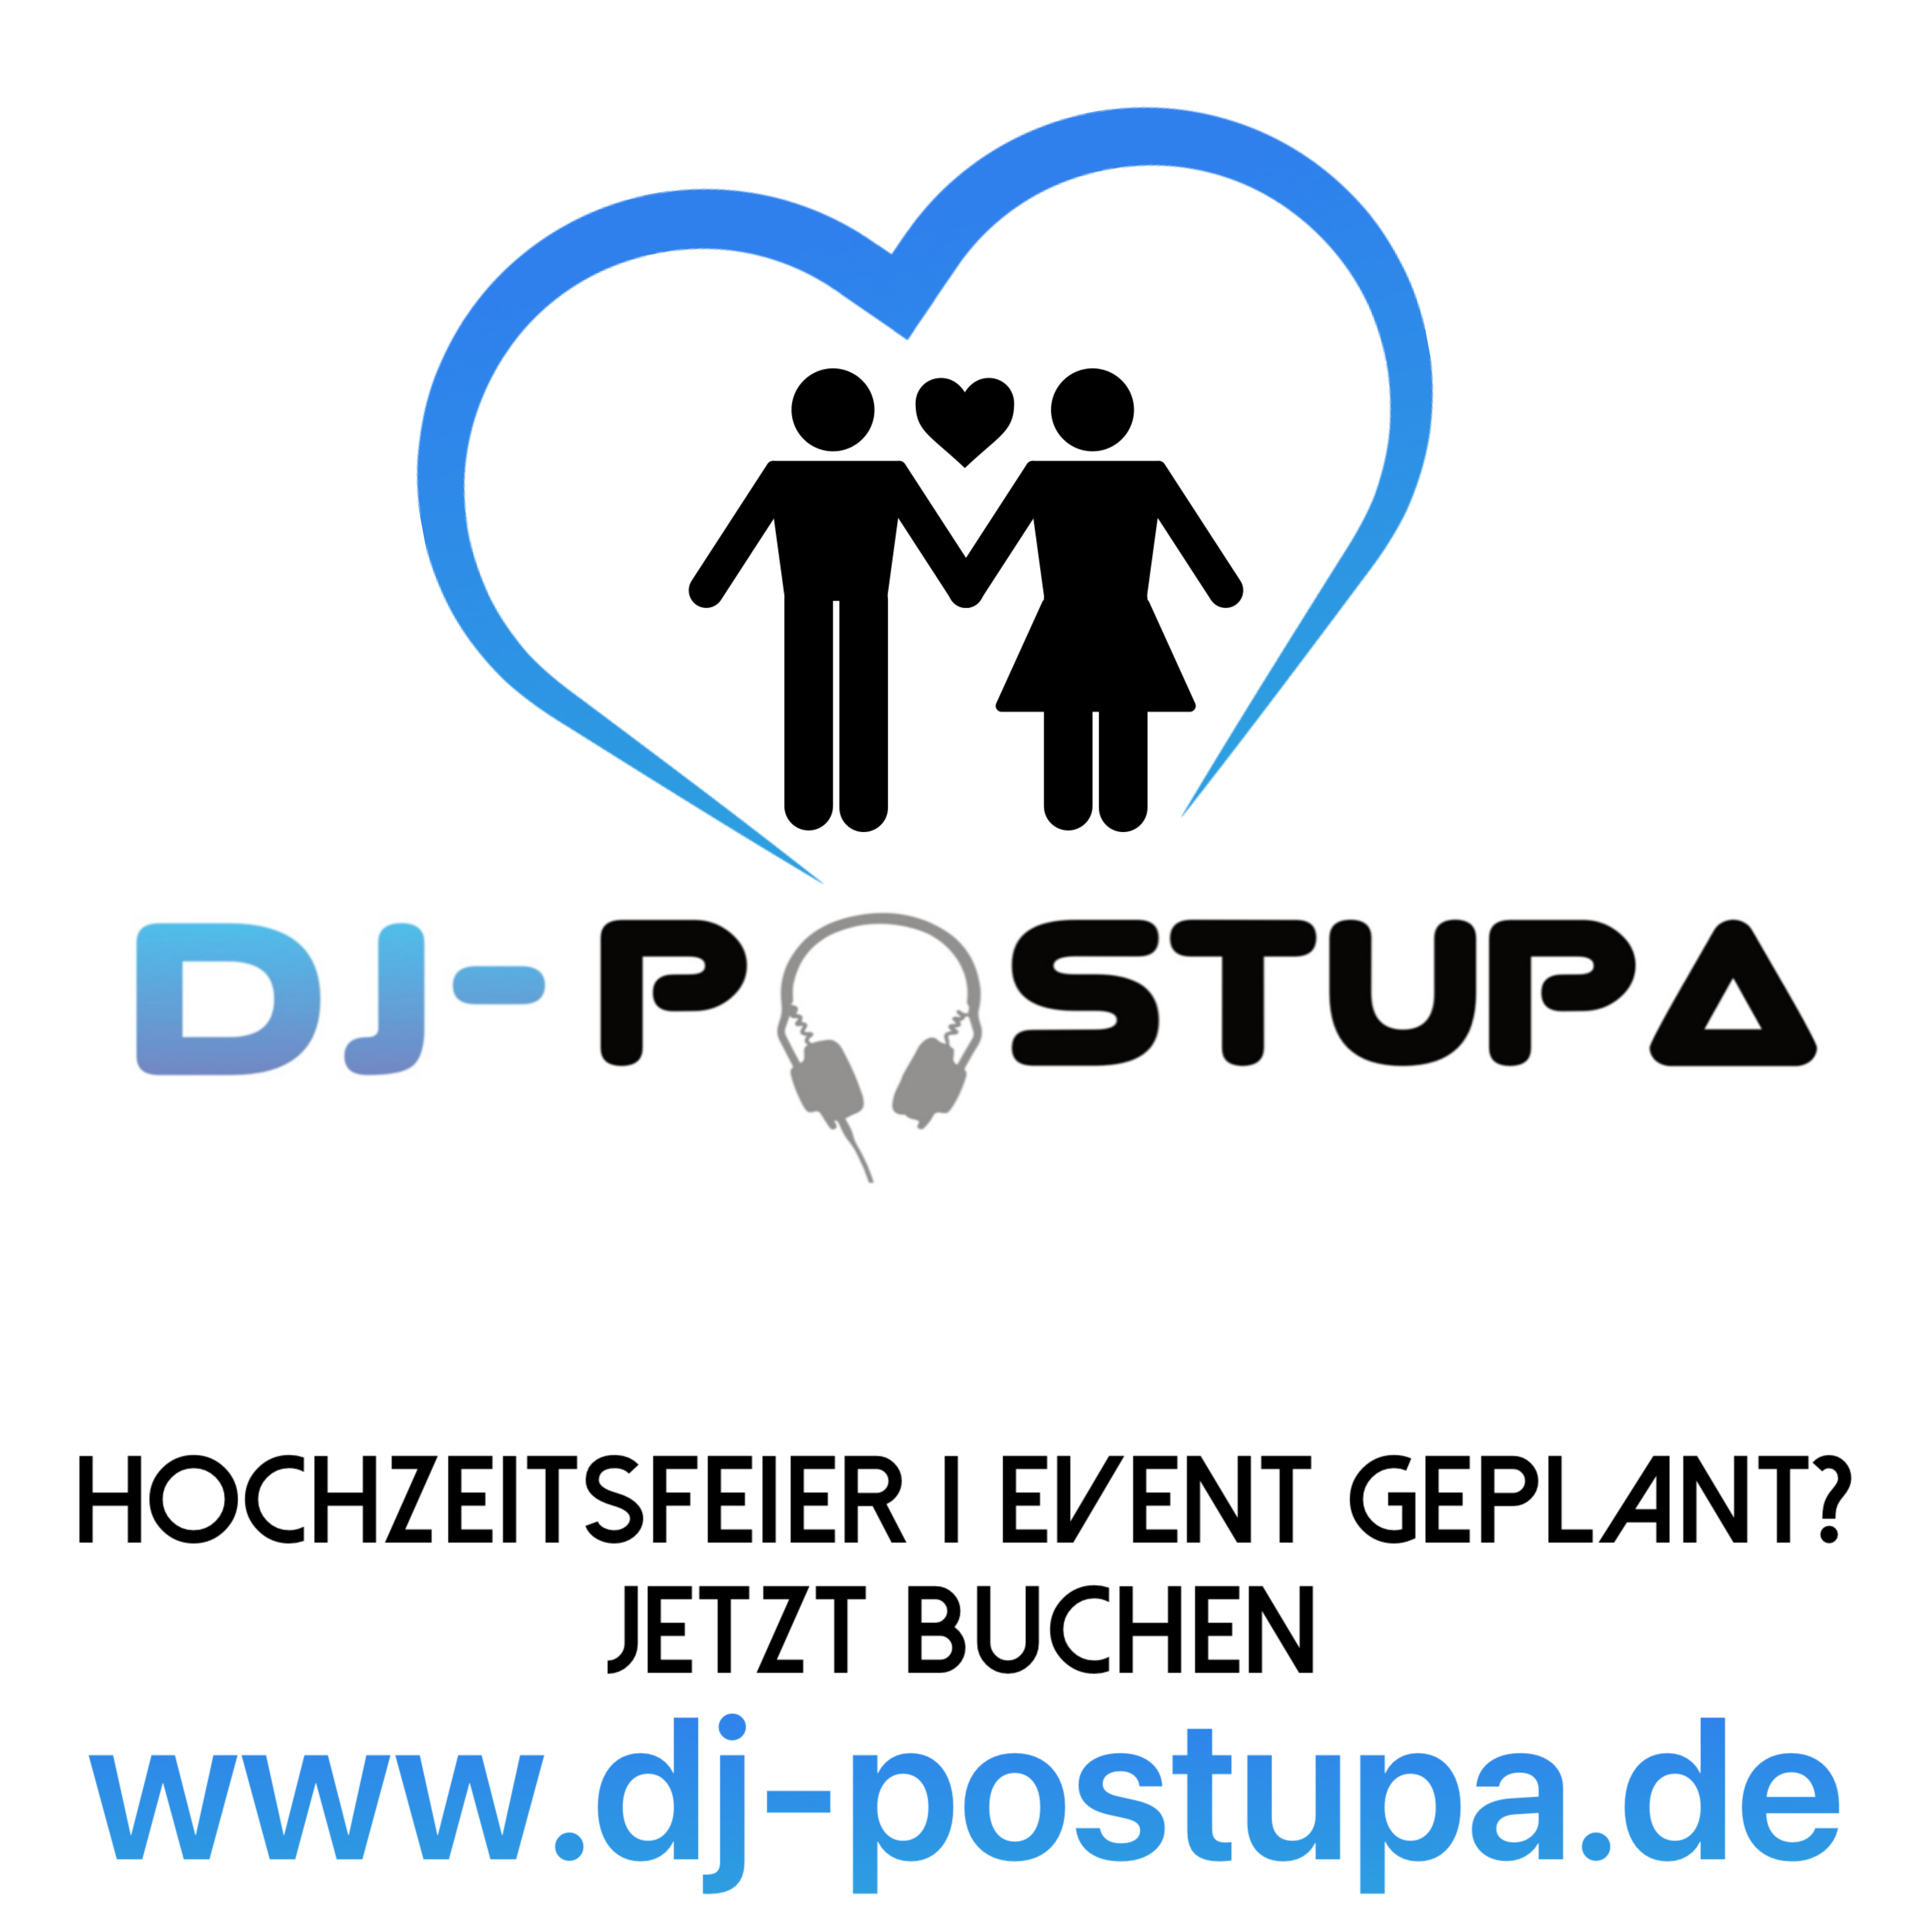 DJ-Postupa - Ihr Hochzeits-DJ